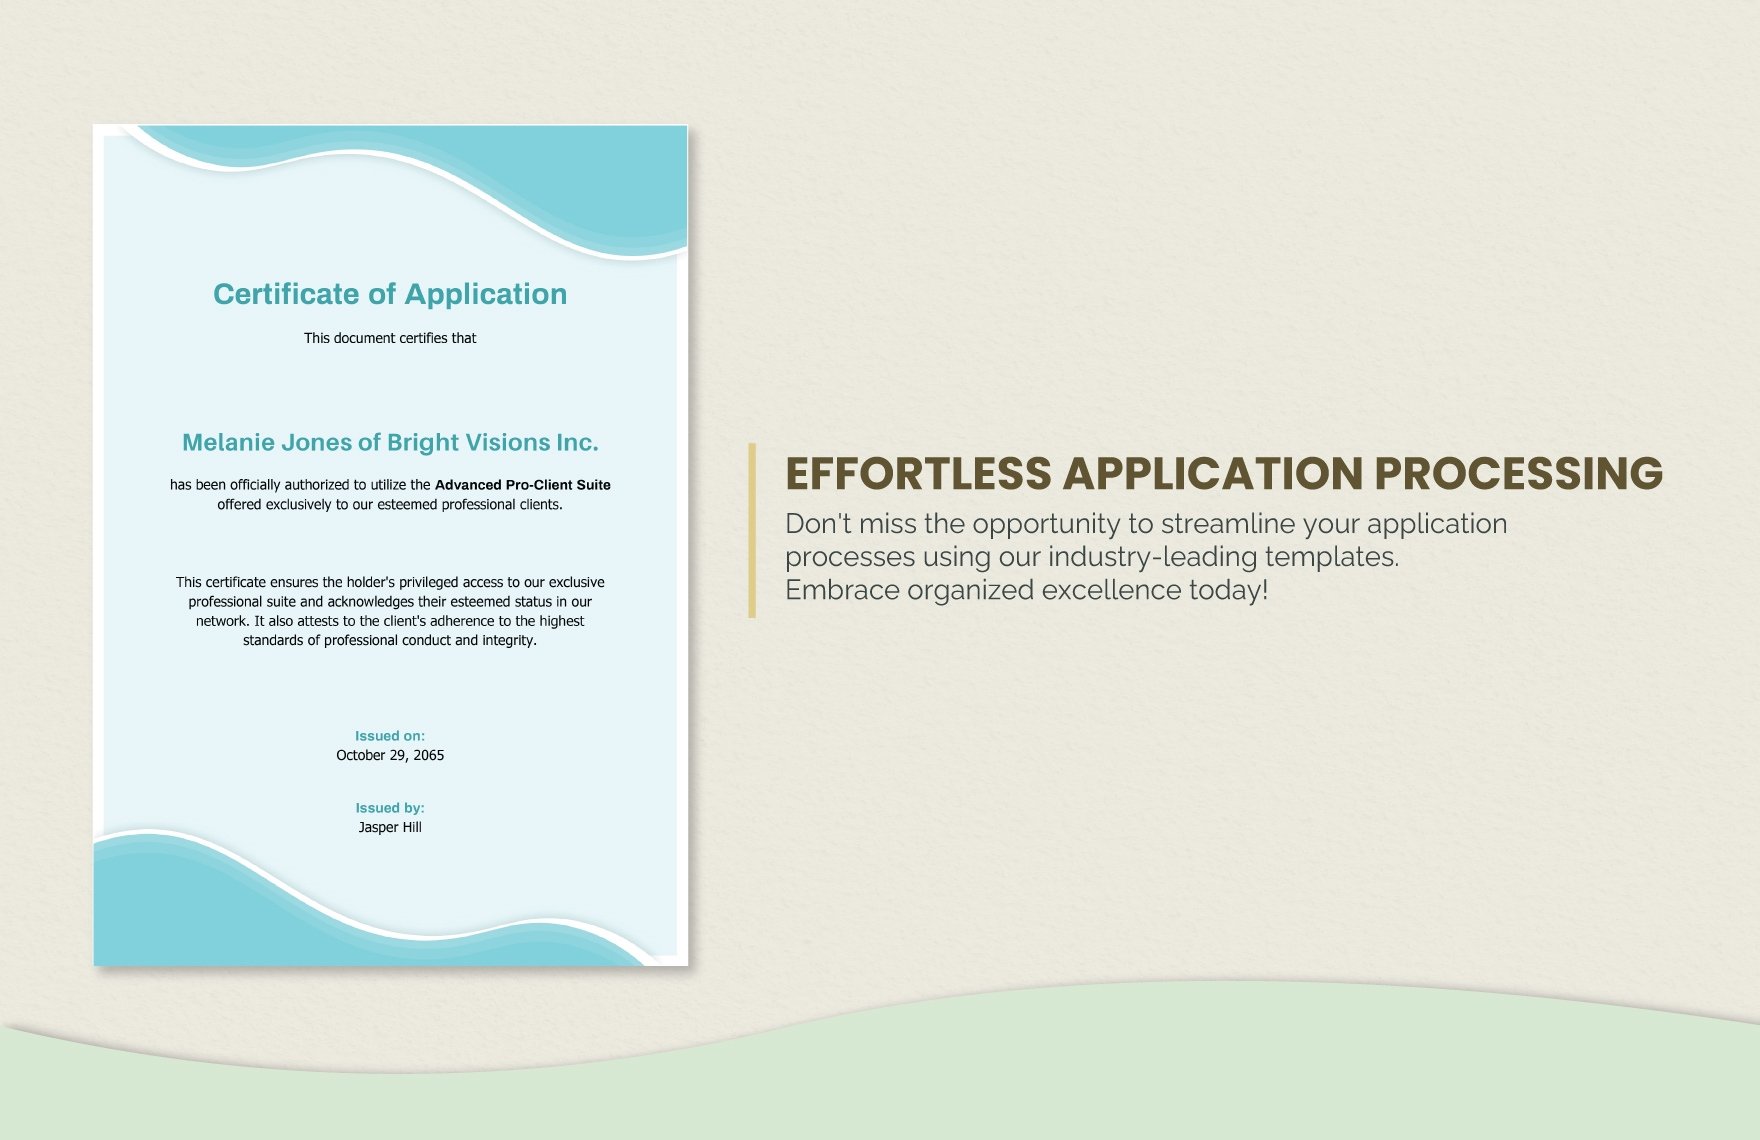 Application Certificate Template